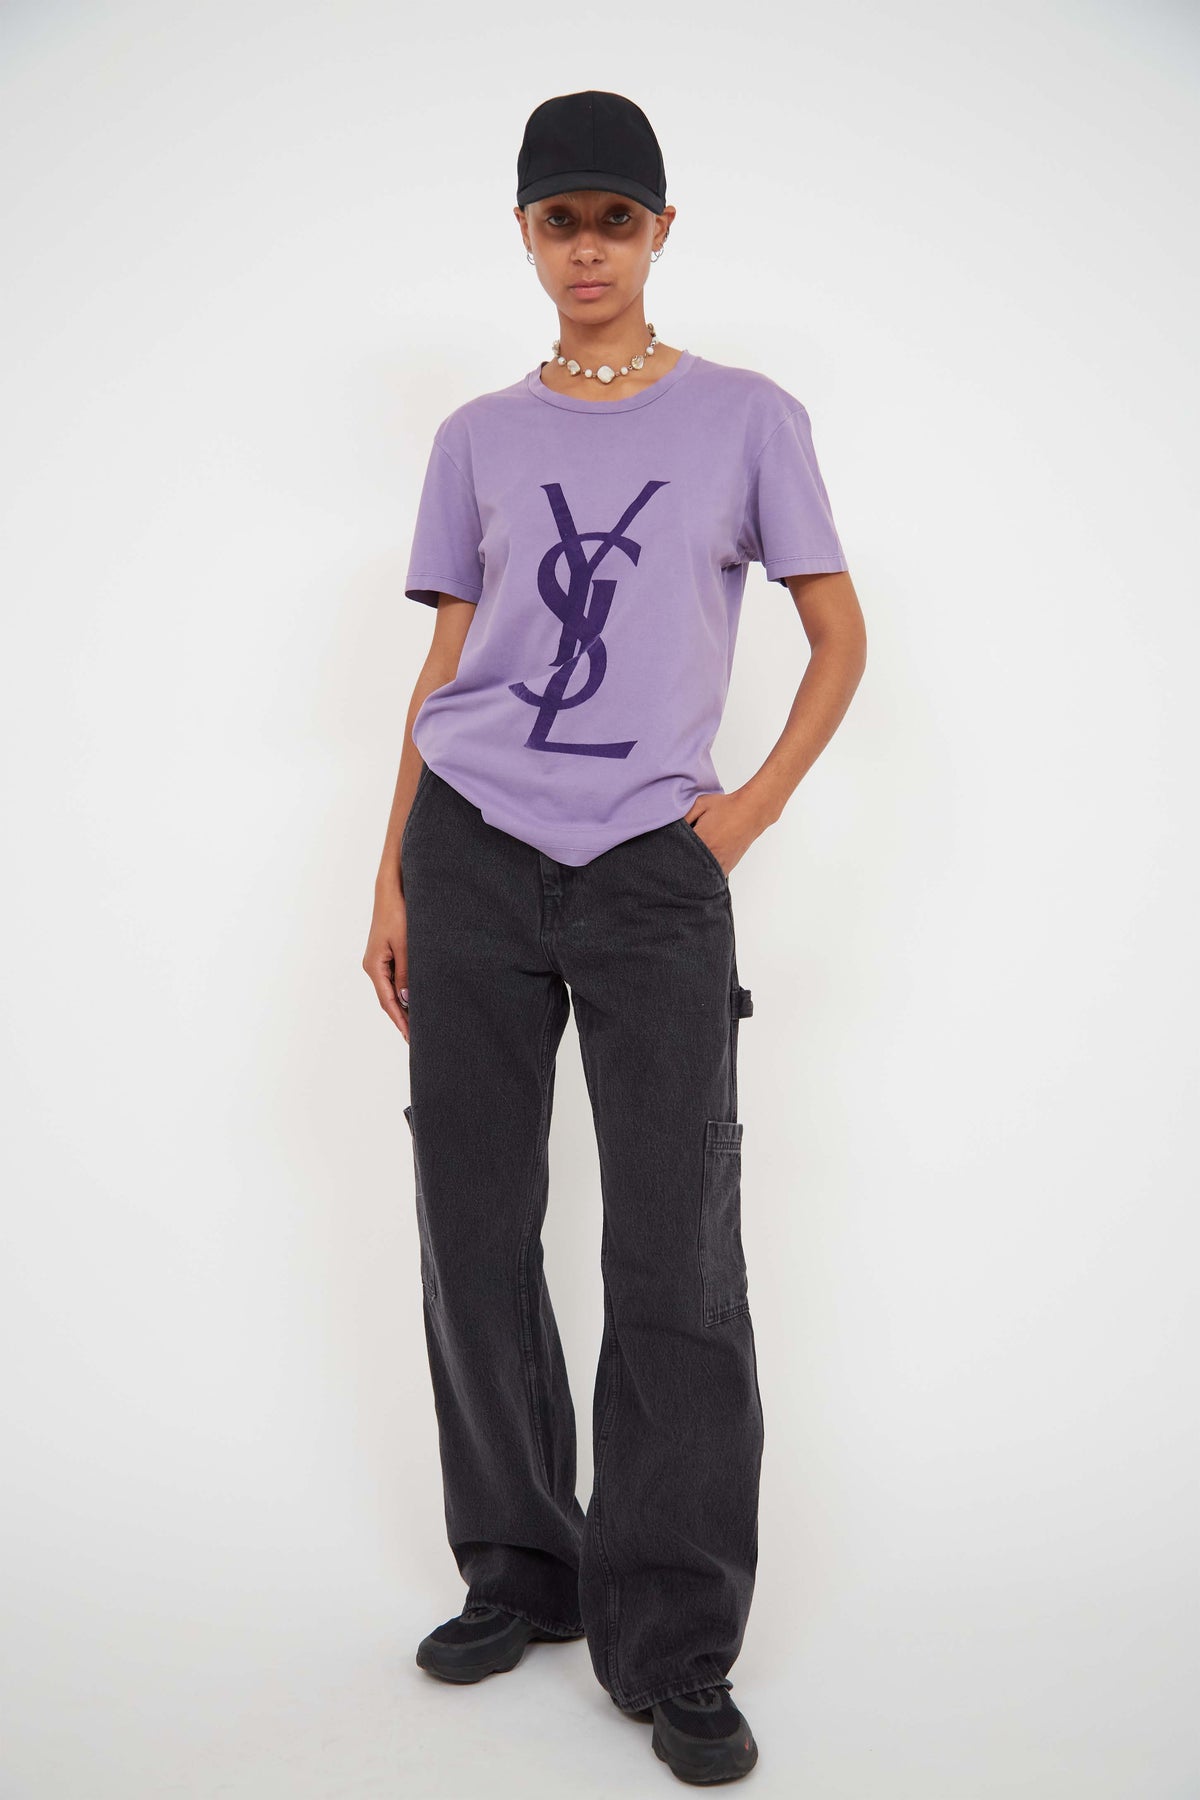 Yves Saint Laurent t-shirt